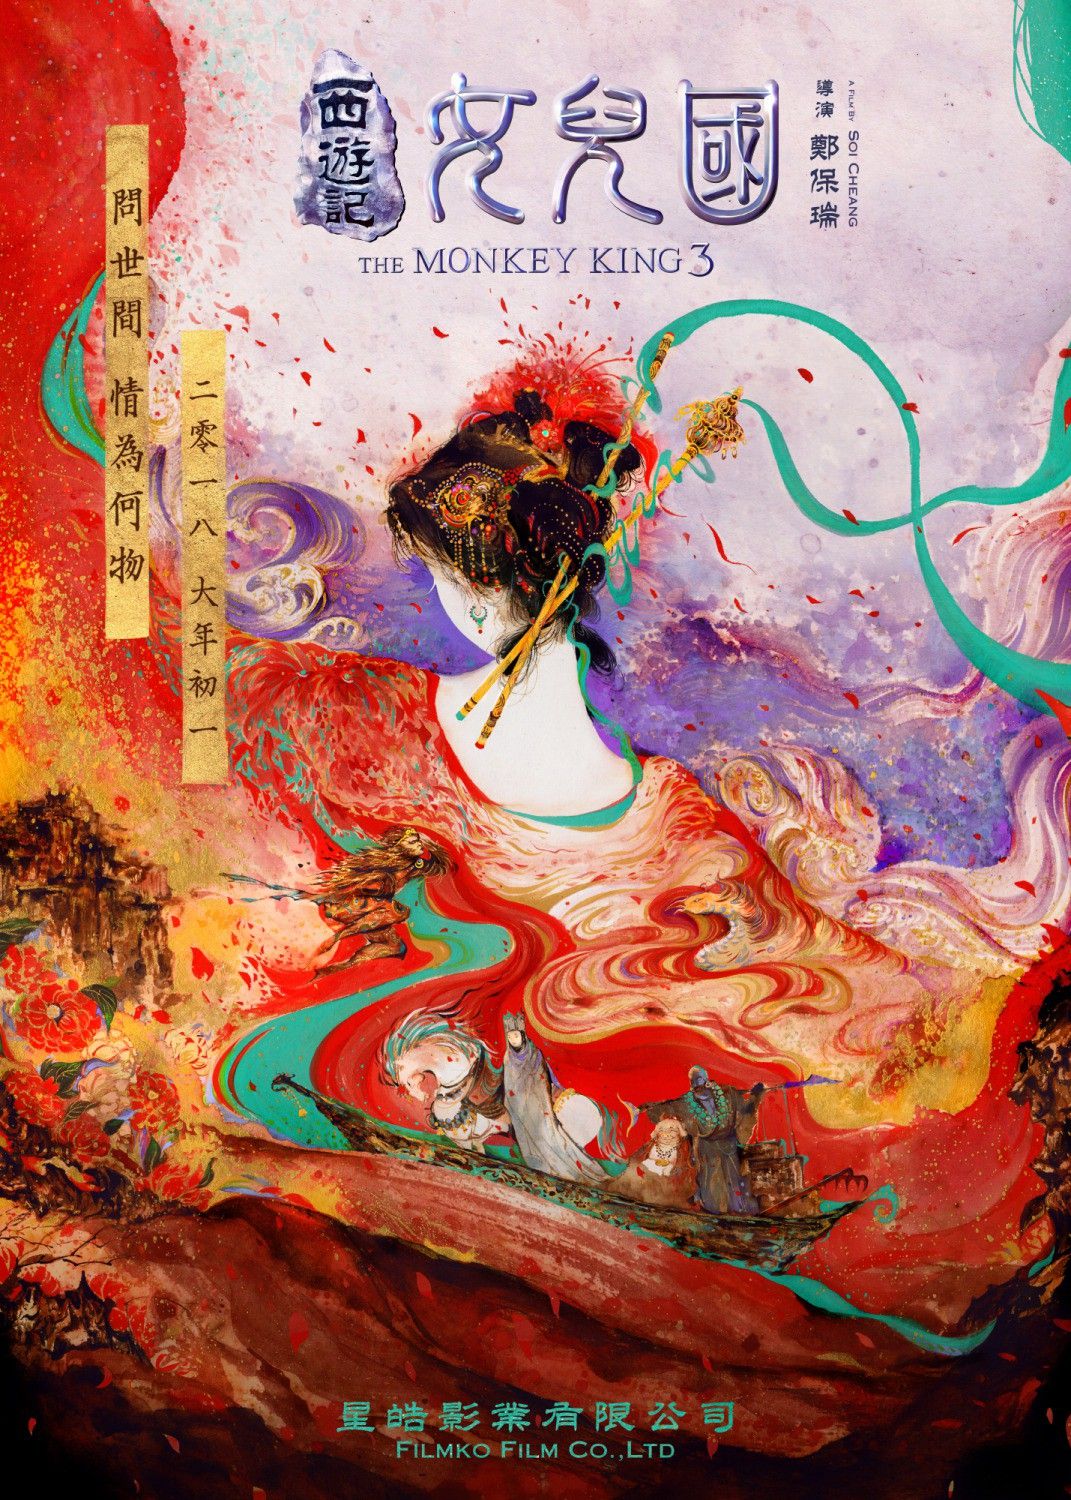 The Monkey King 3 (Soi Cheang, 2018)